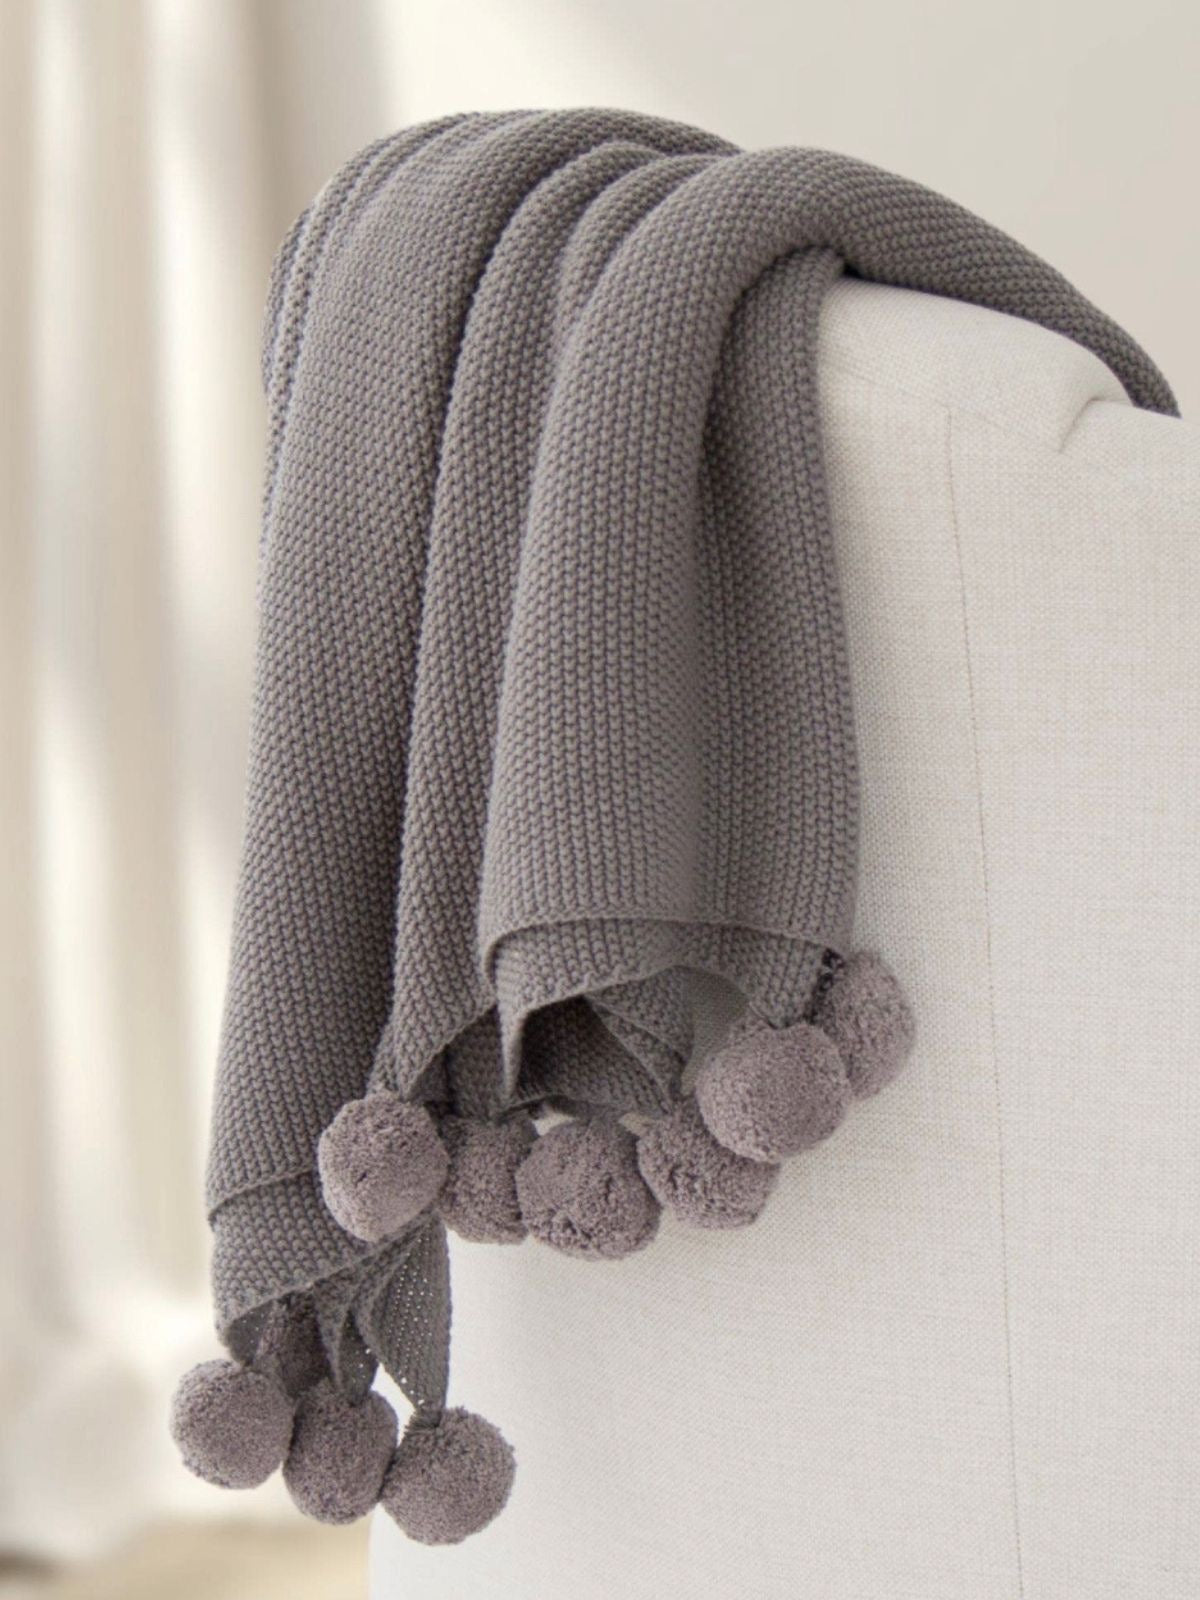 100% Cotton Seedstitch Throw Blanket with Pom Poms in Luxurious Grey Color, 50W x 60L. 